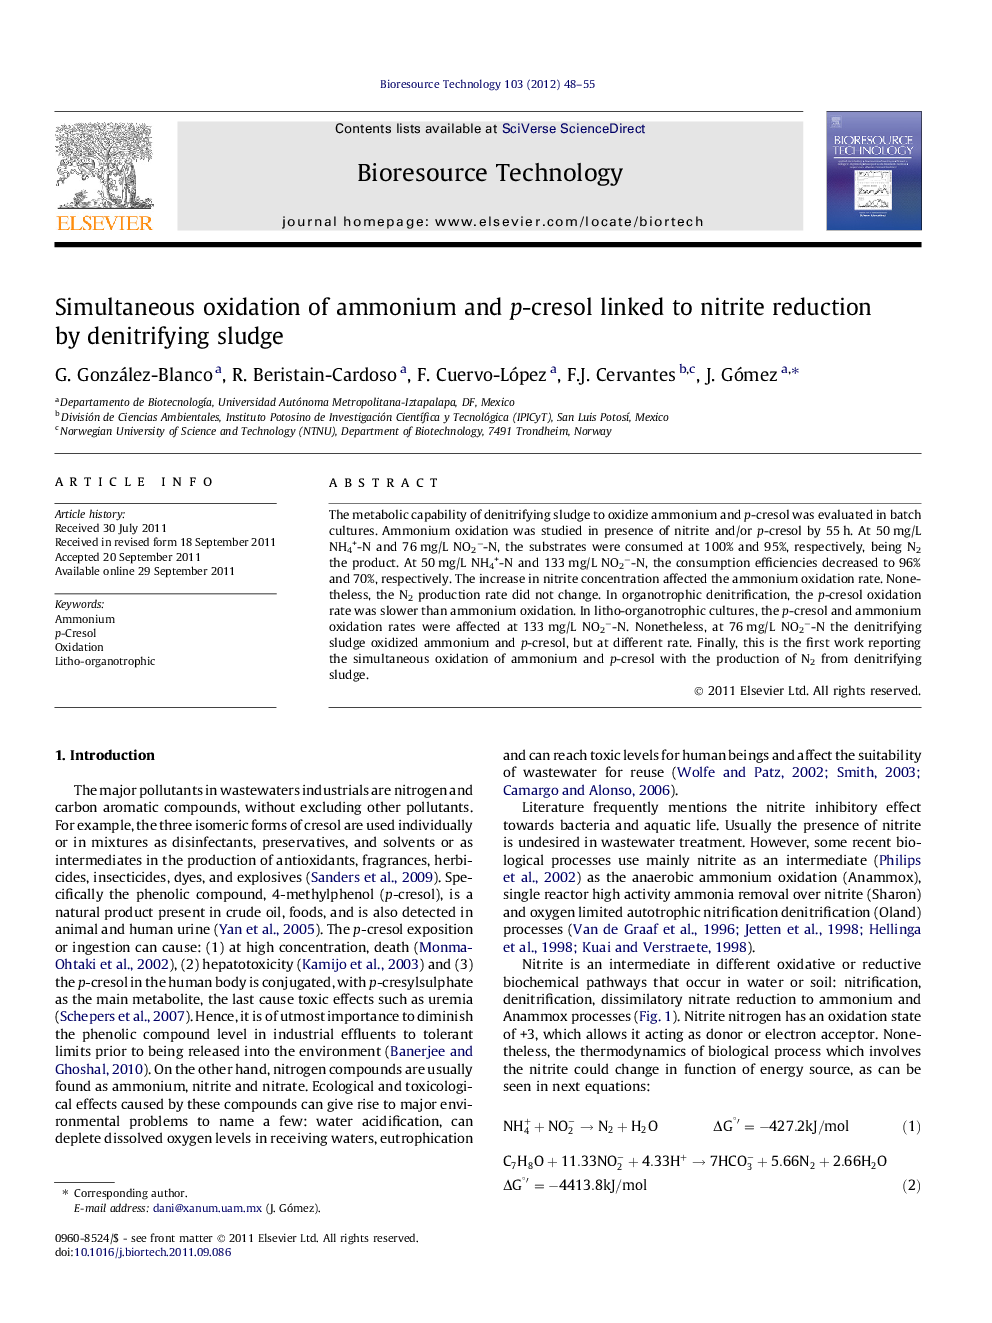 Simultaneous oxidation of ammonium and p-cresol linked to nitrite reduction by denitrifying sludge